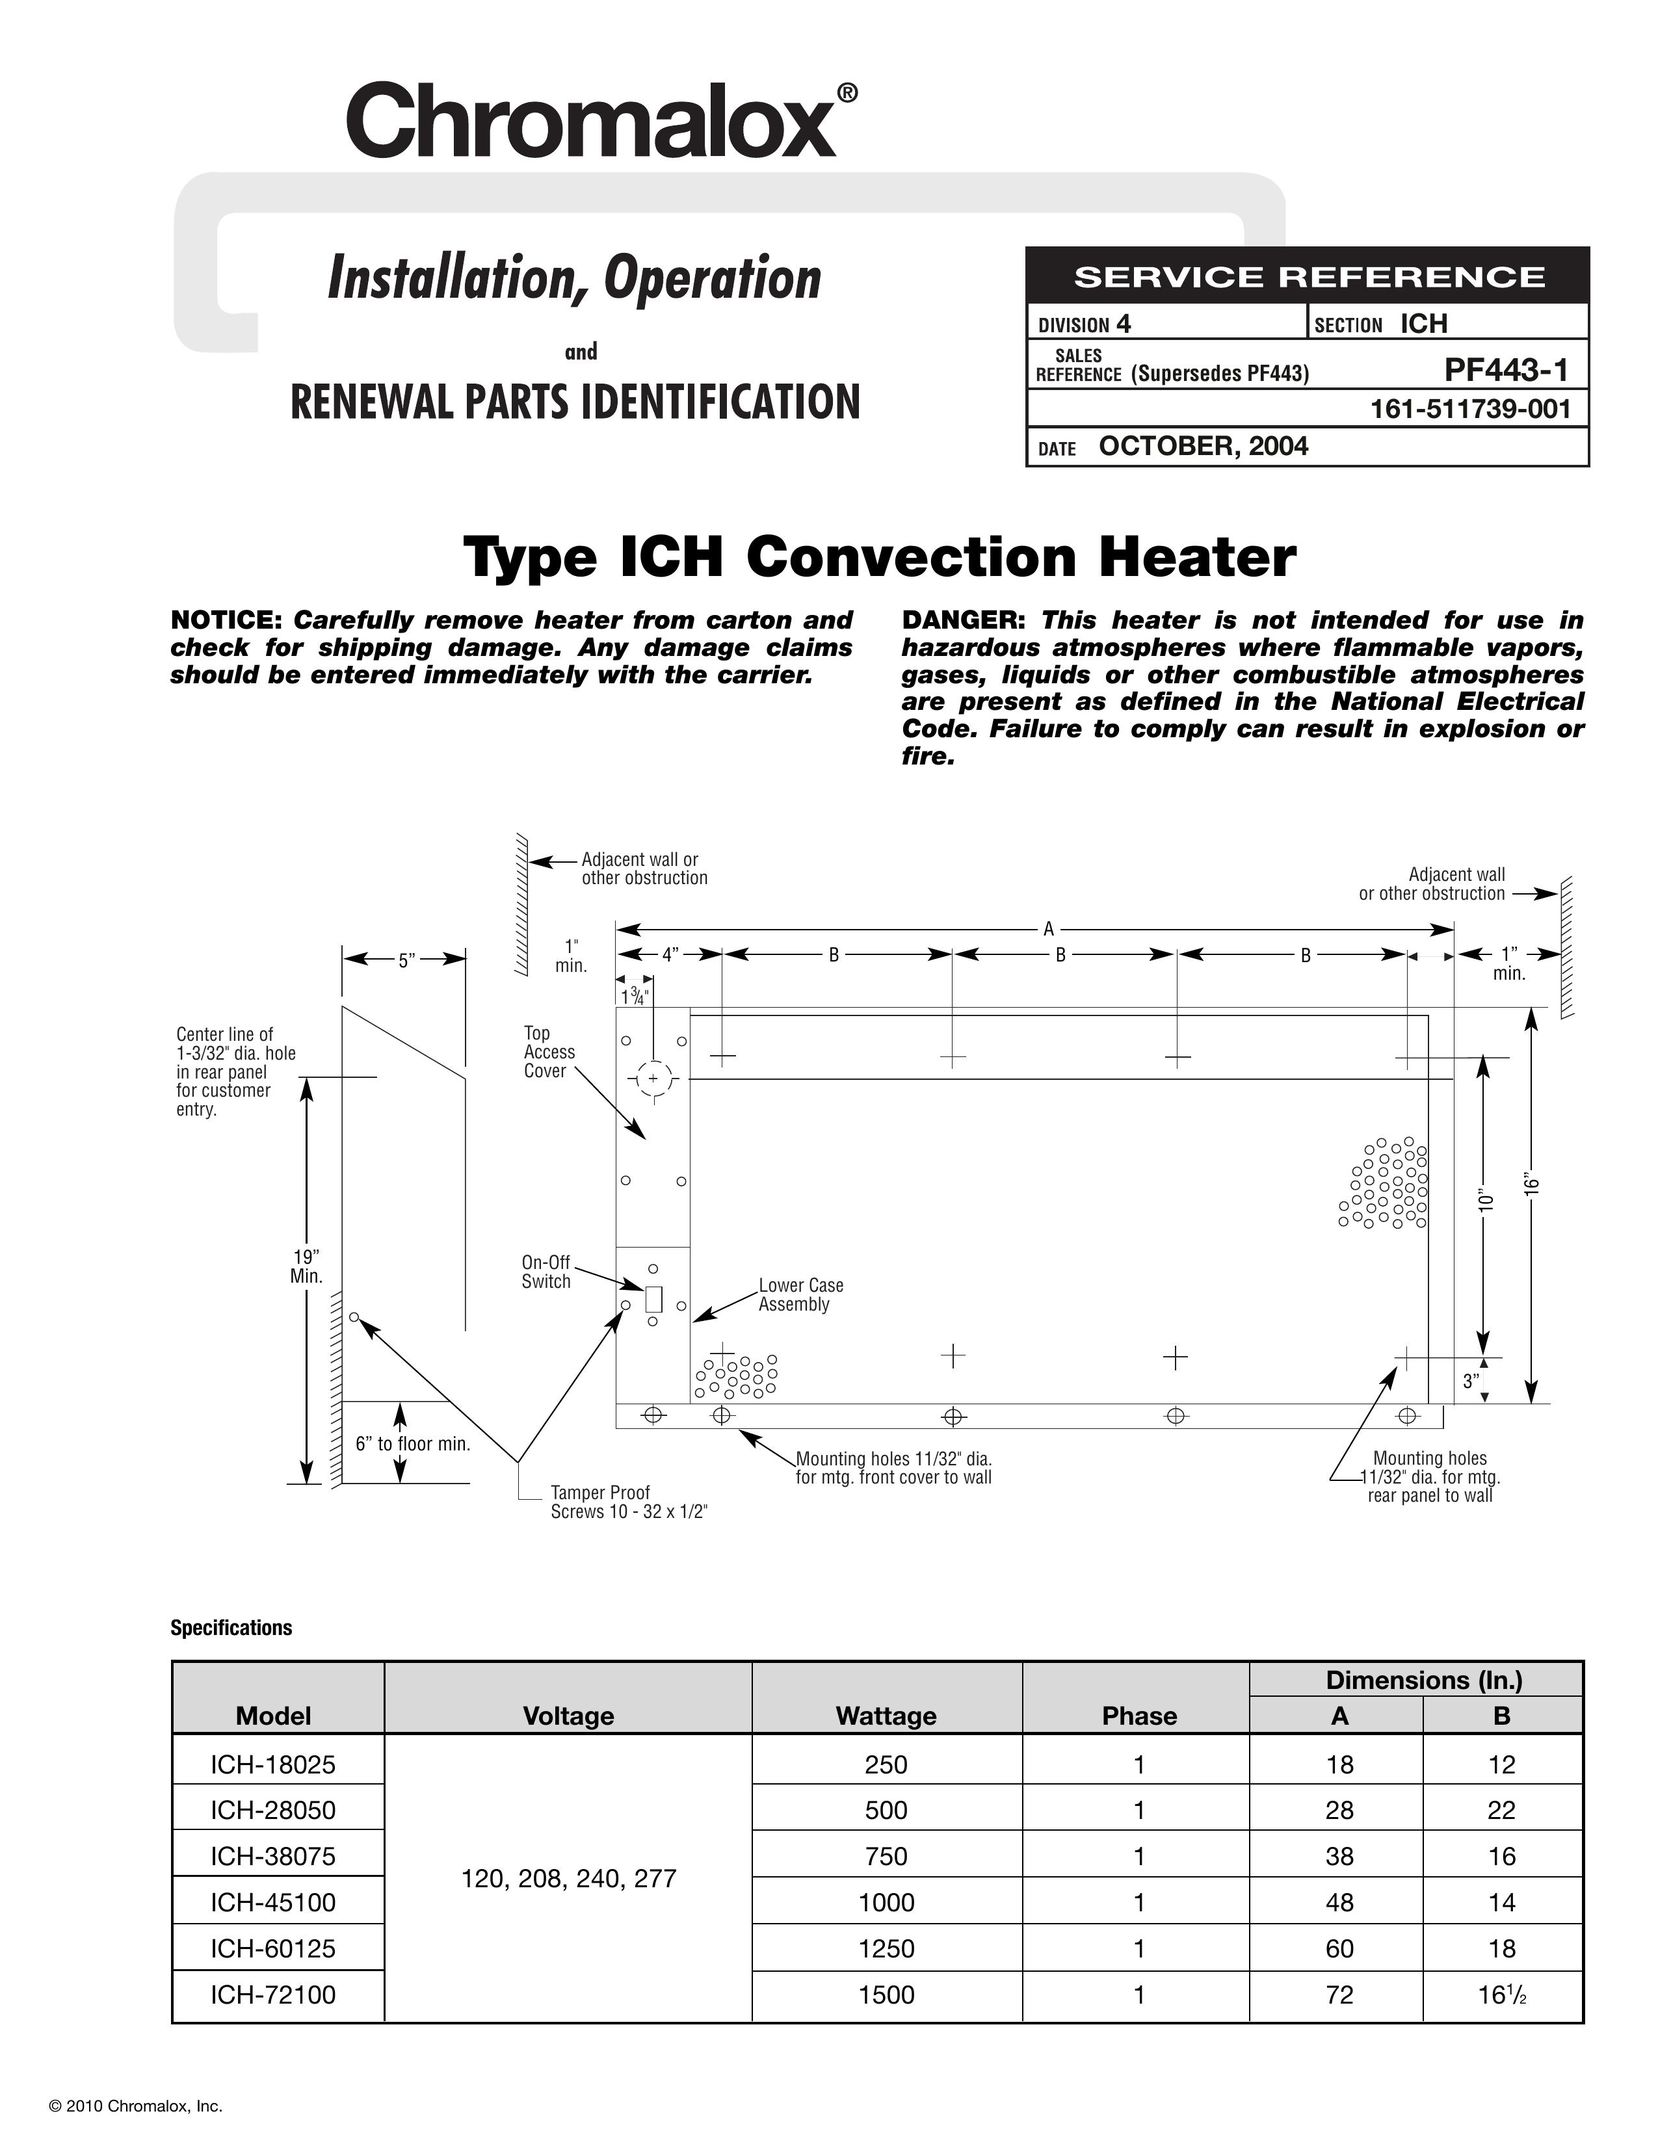 Chromalox ICH-28050 Electric Heater User Manual